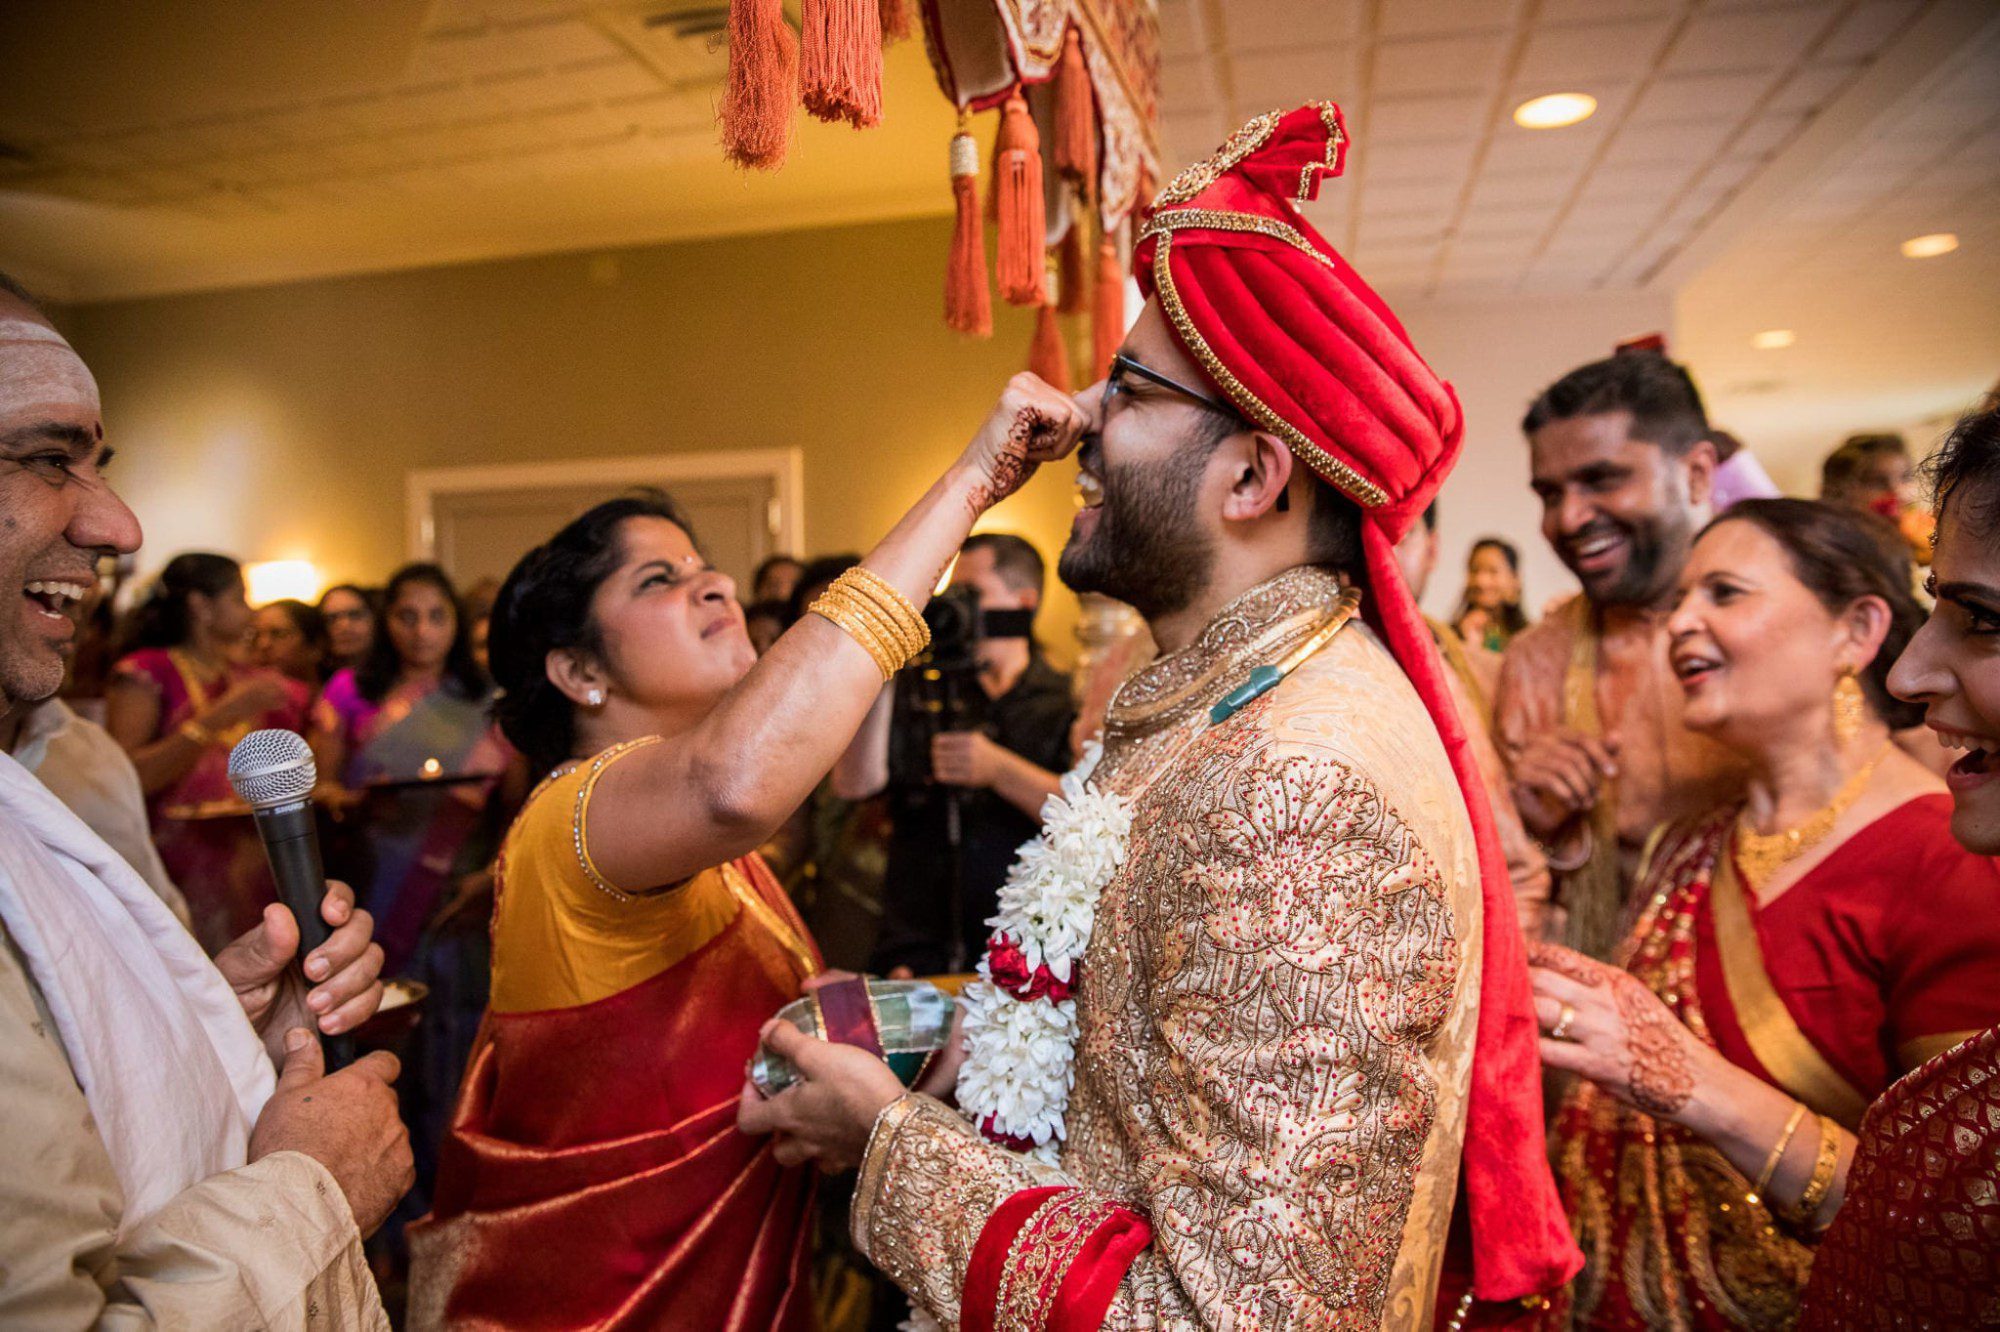 Indian wedding mother of bride pinching groom's nose